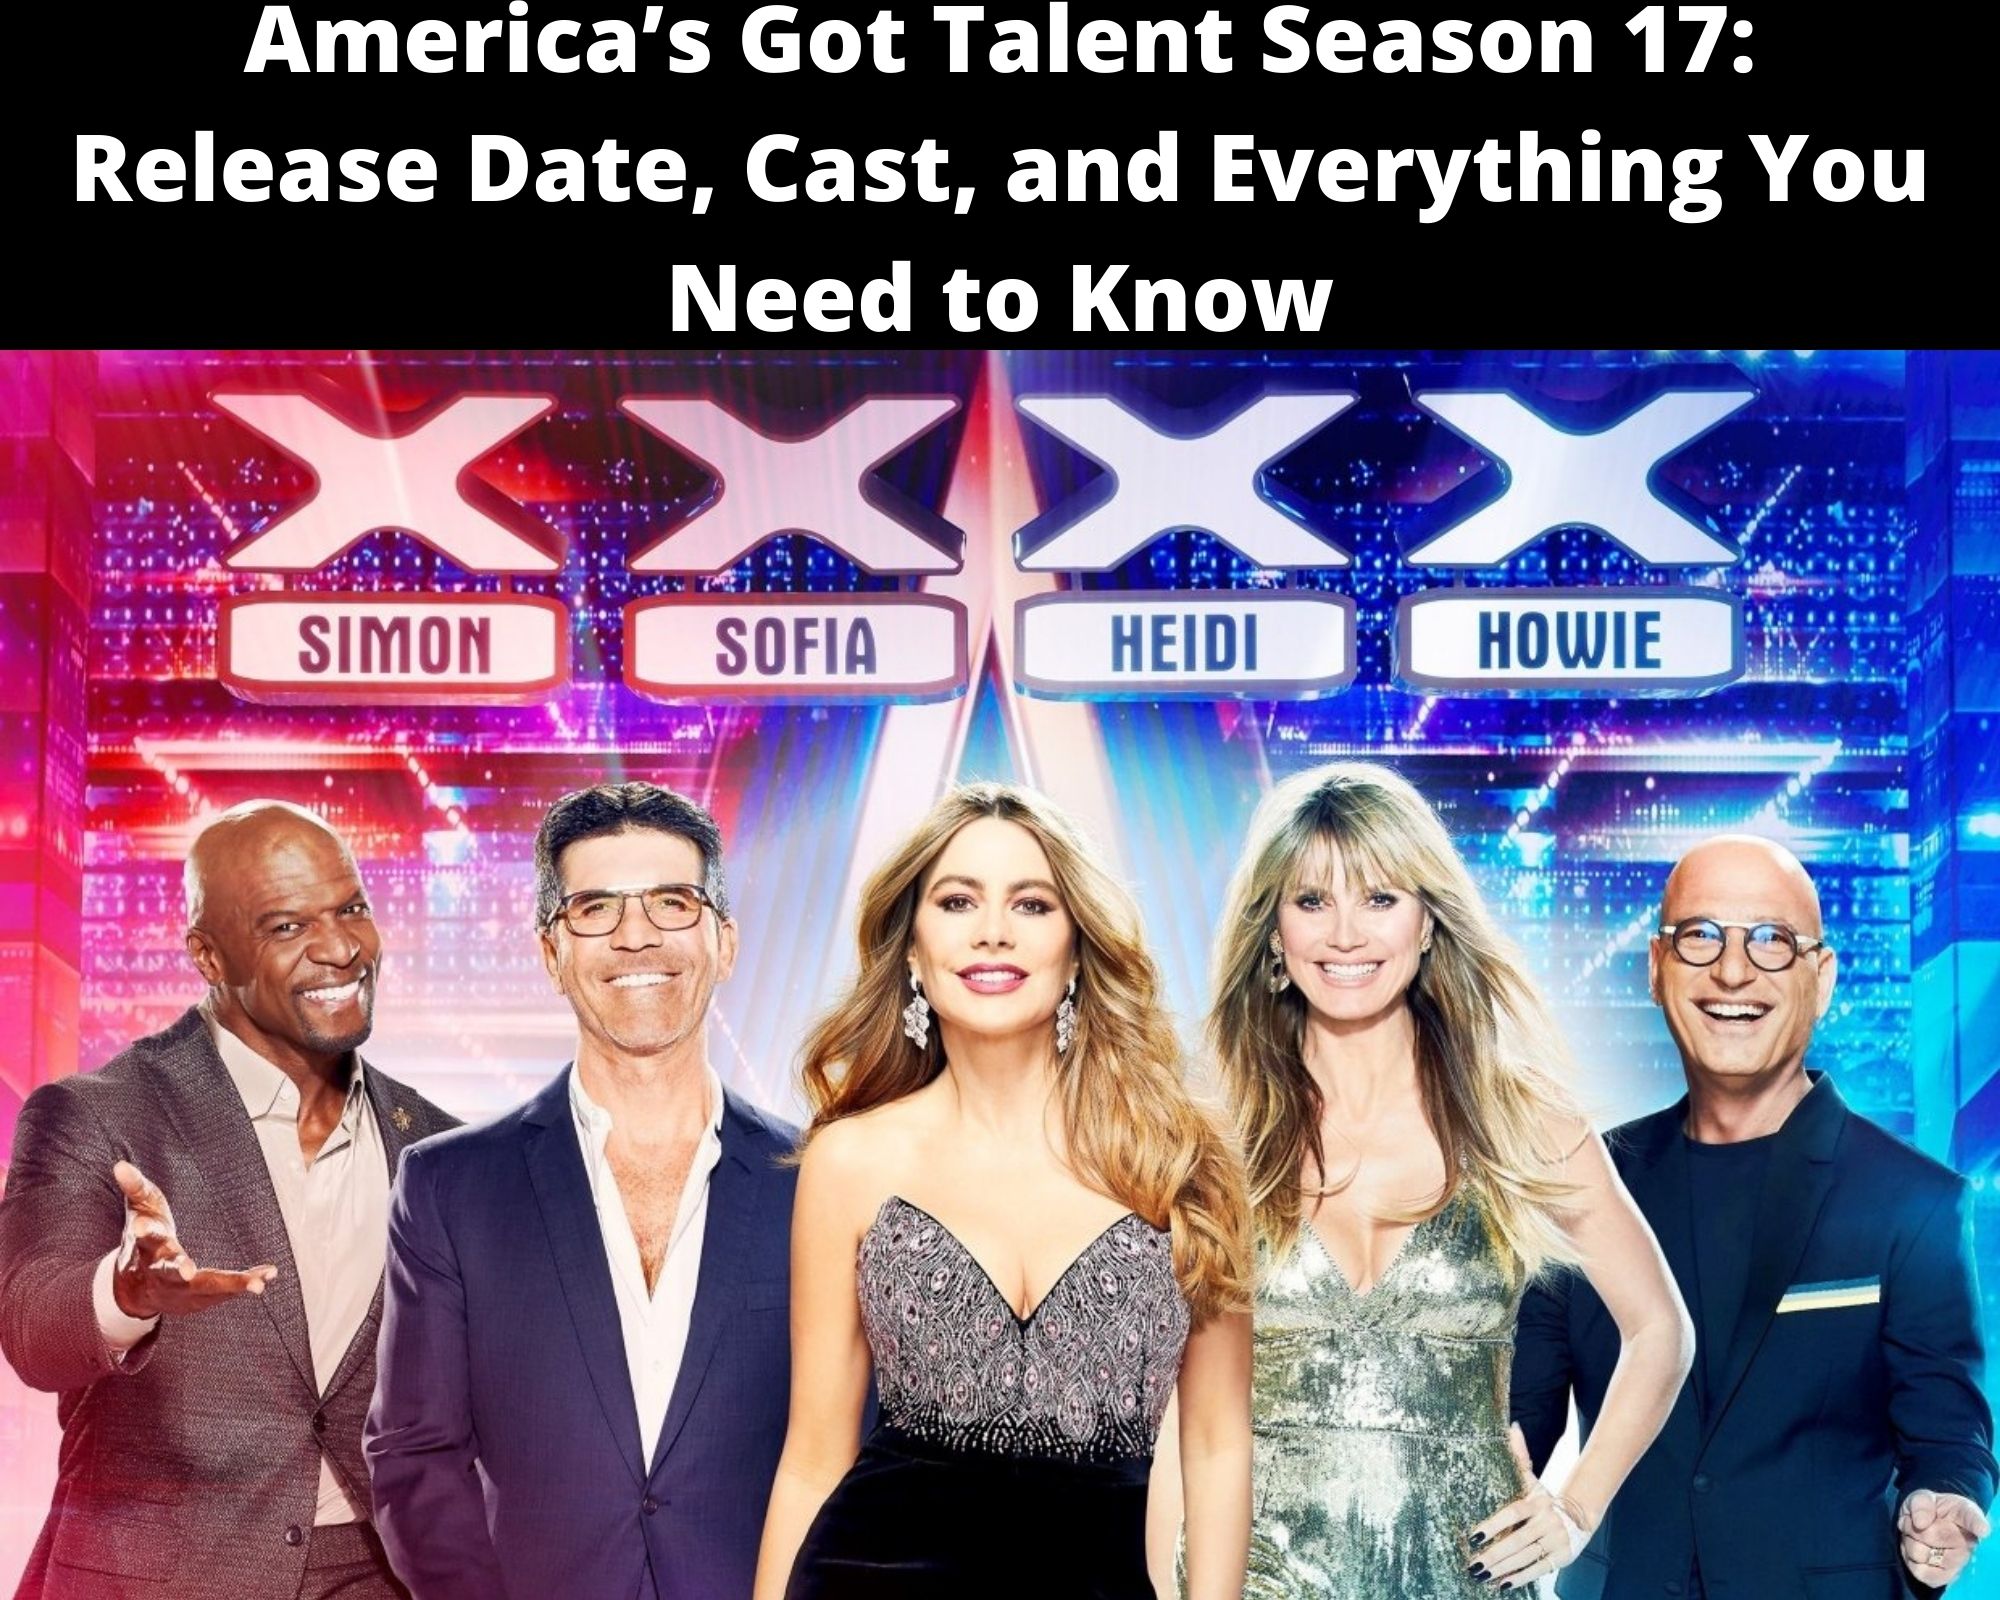 America’s Got Talent Season 17